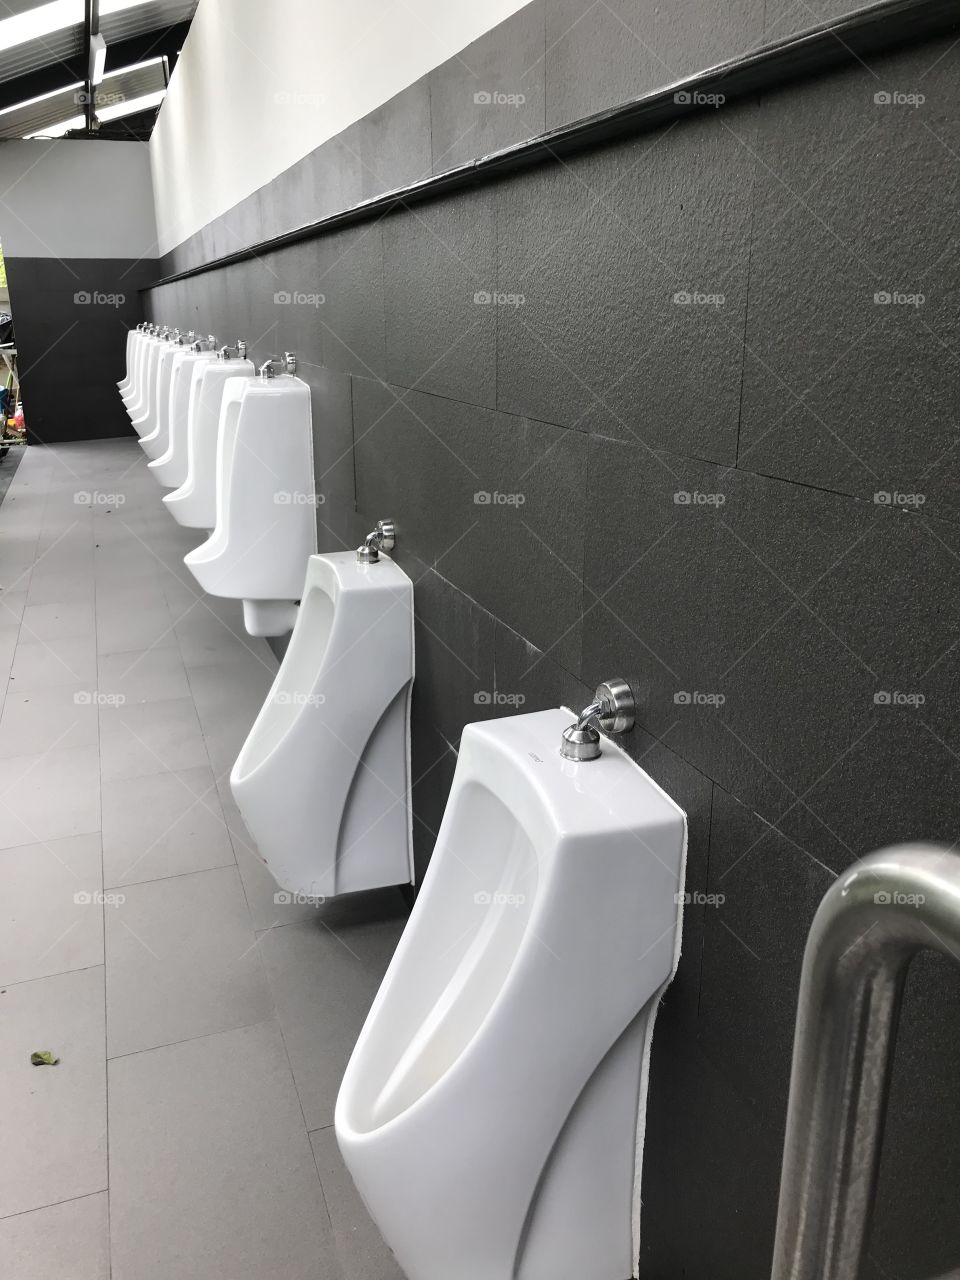 Urinals for men